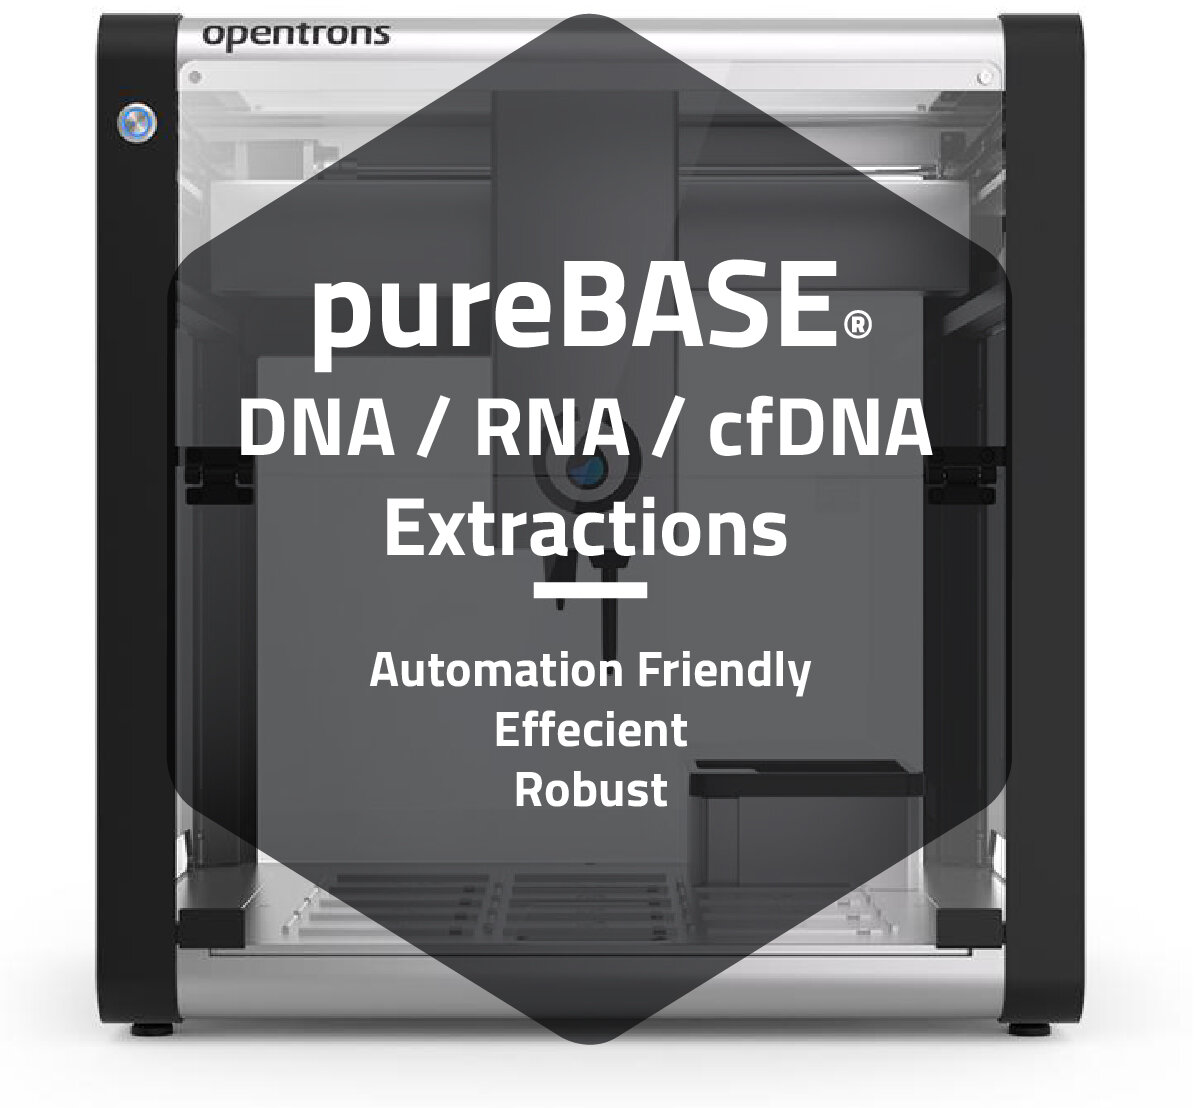 purebase DNARNACFDNA.jpg